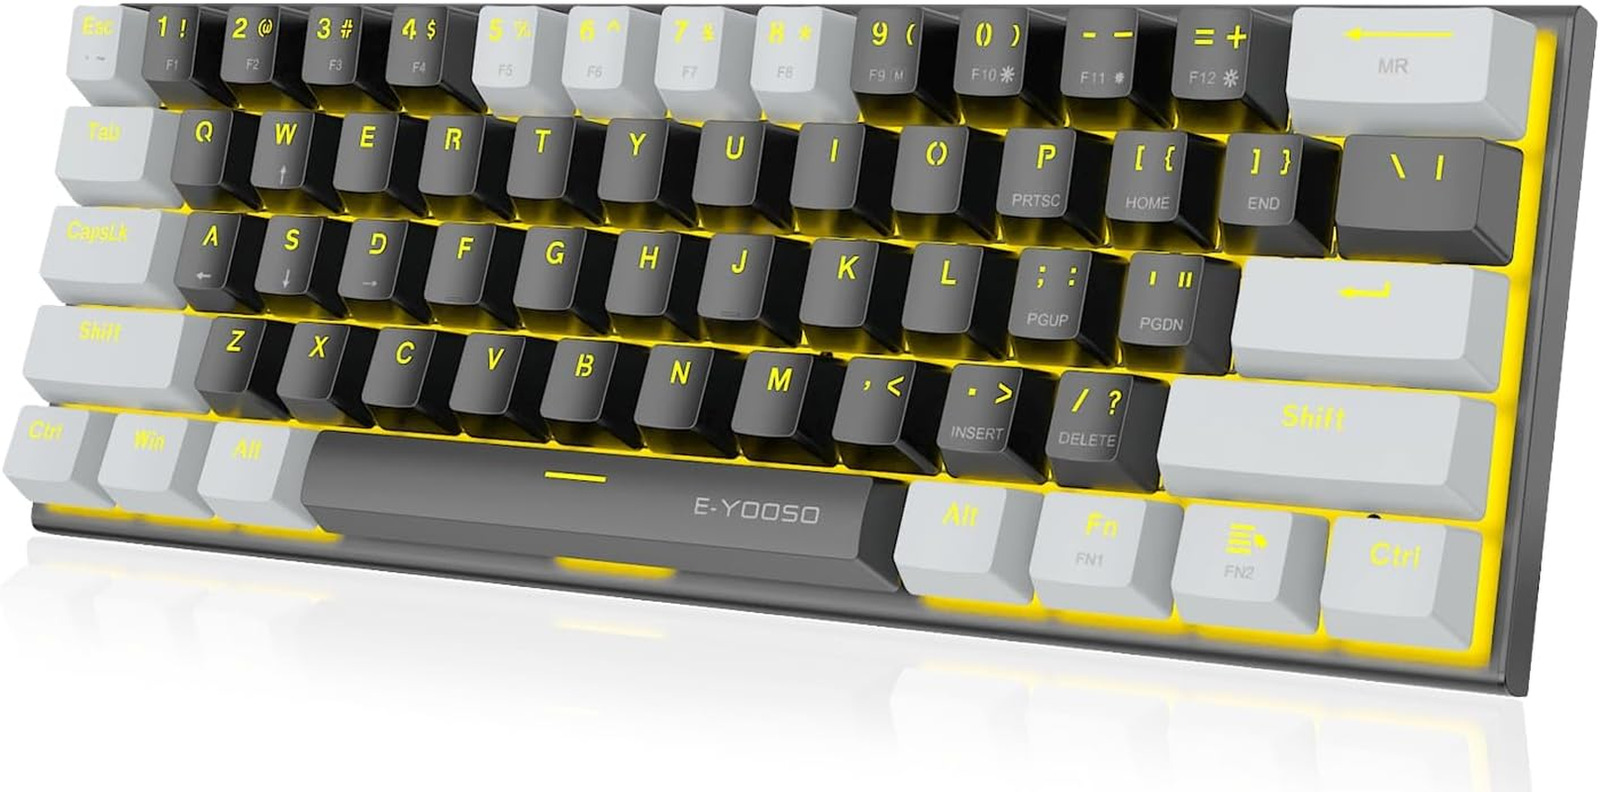 E-YOOSO Portable 60% Mechanical Gaming Keyboard,Backlit Mini Keyboard, Small Com